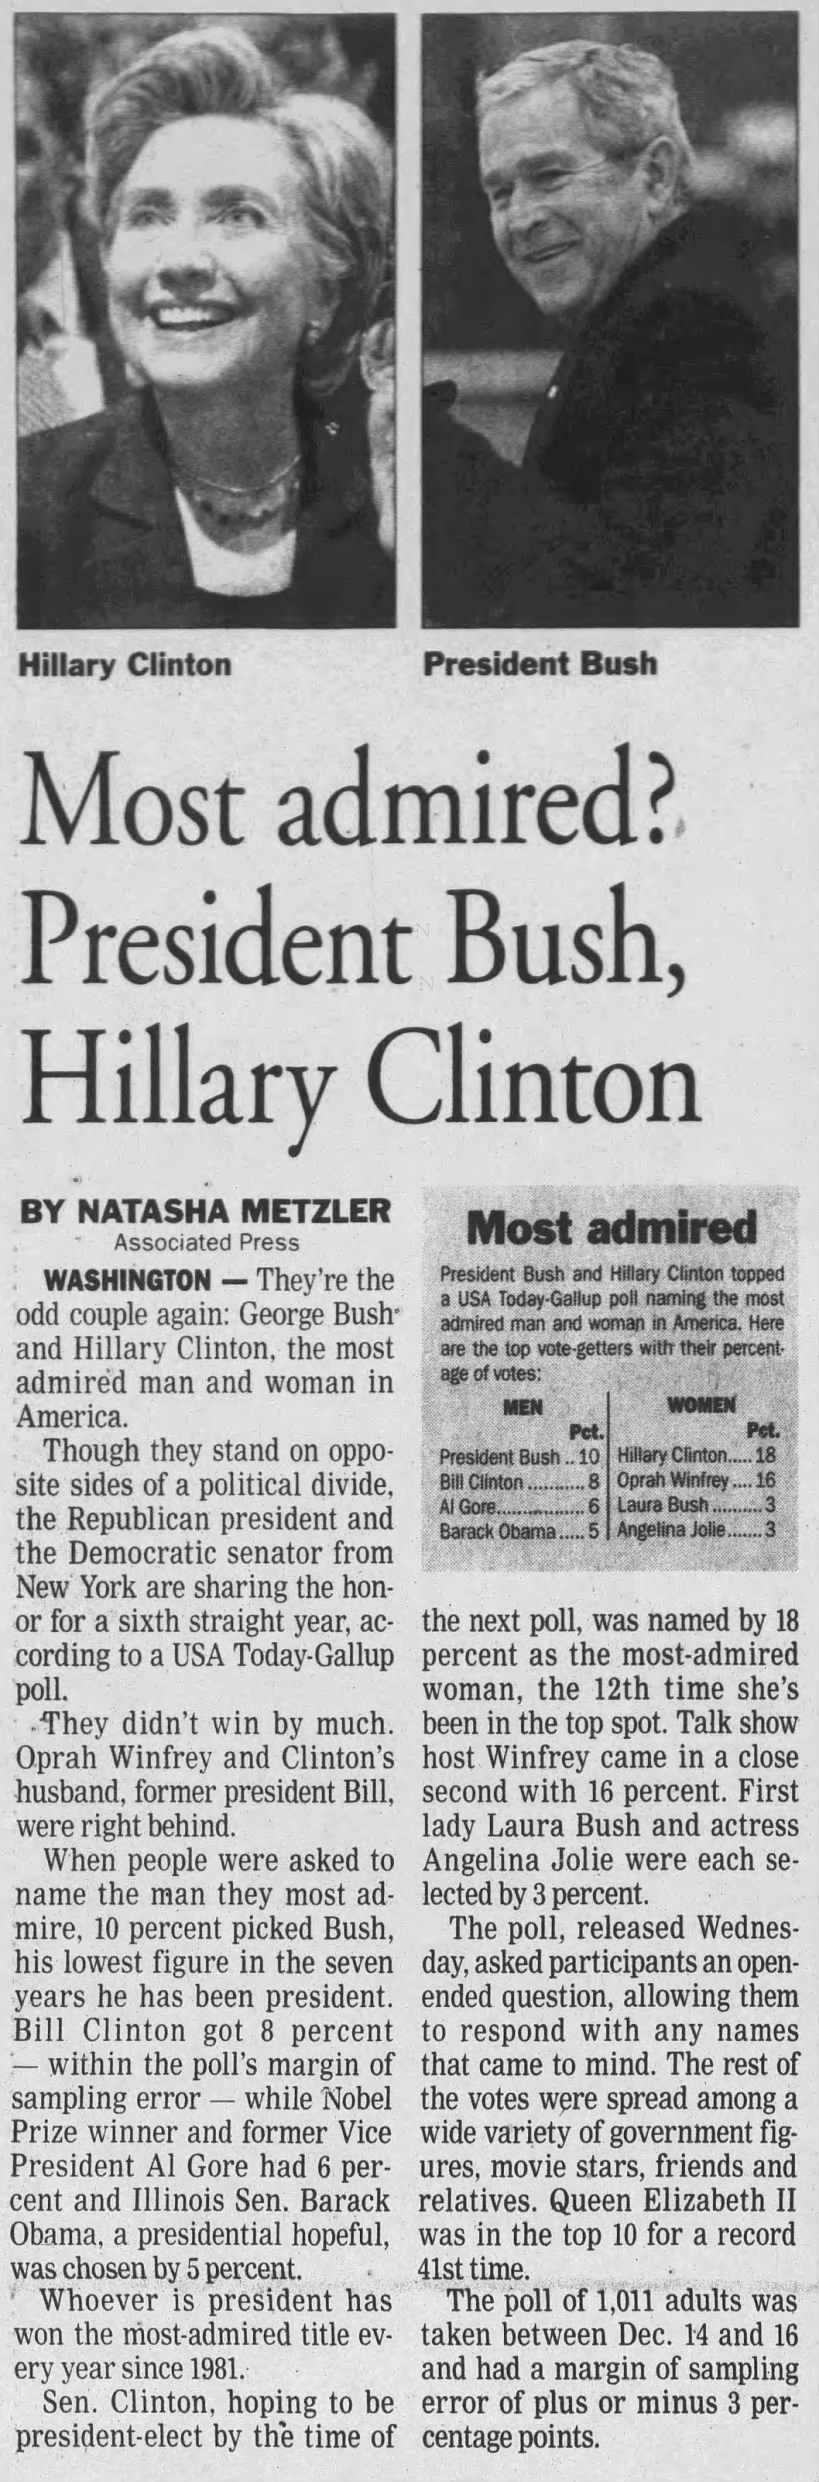 Most Admired? President Bush, Hillary Clinton?